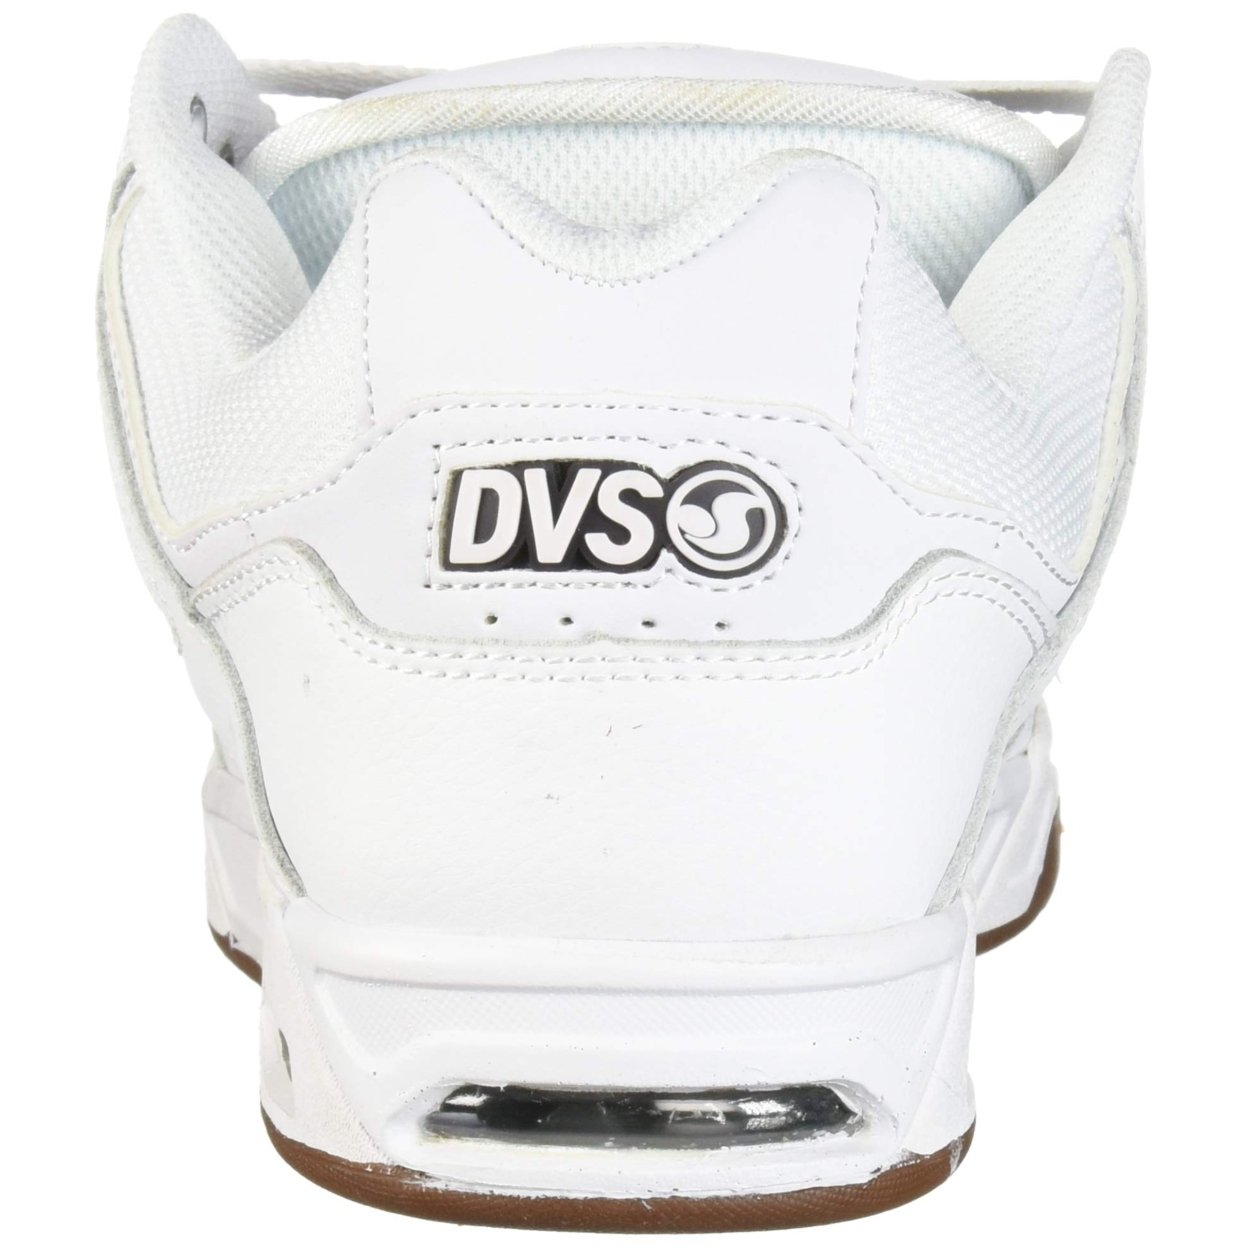 Dvs Footwear Mens Men's Enduro HEIR Skate Shoe WHITE GUM NUBUCK - WHITE GUM NUBUCK, 10-M